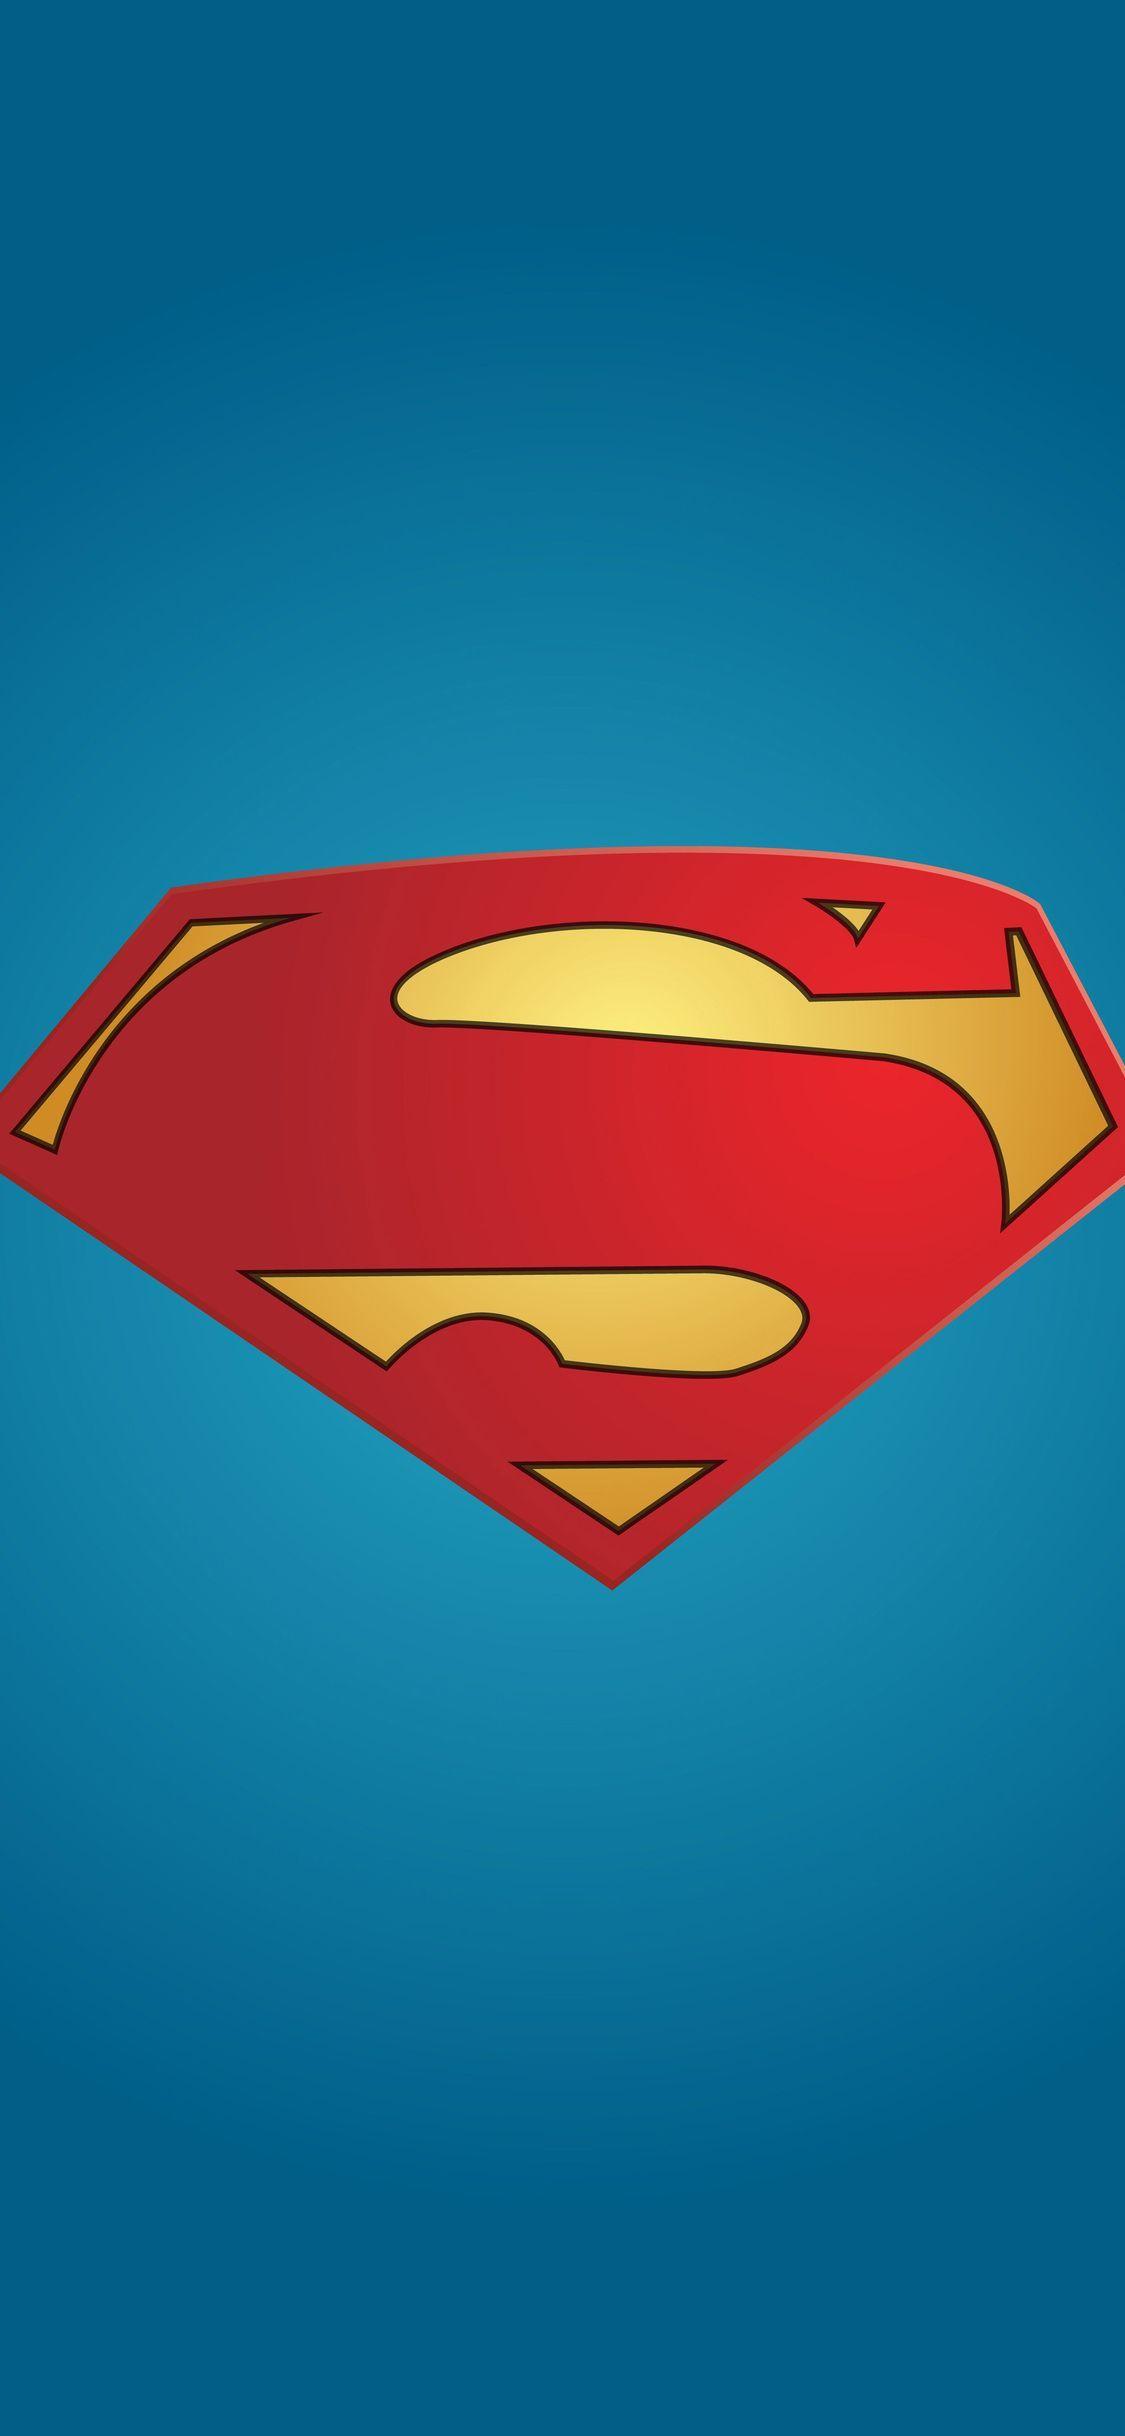 Superman Logo Minimal iPhone X. iPhone Wallpaper